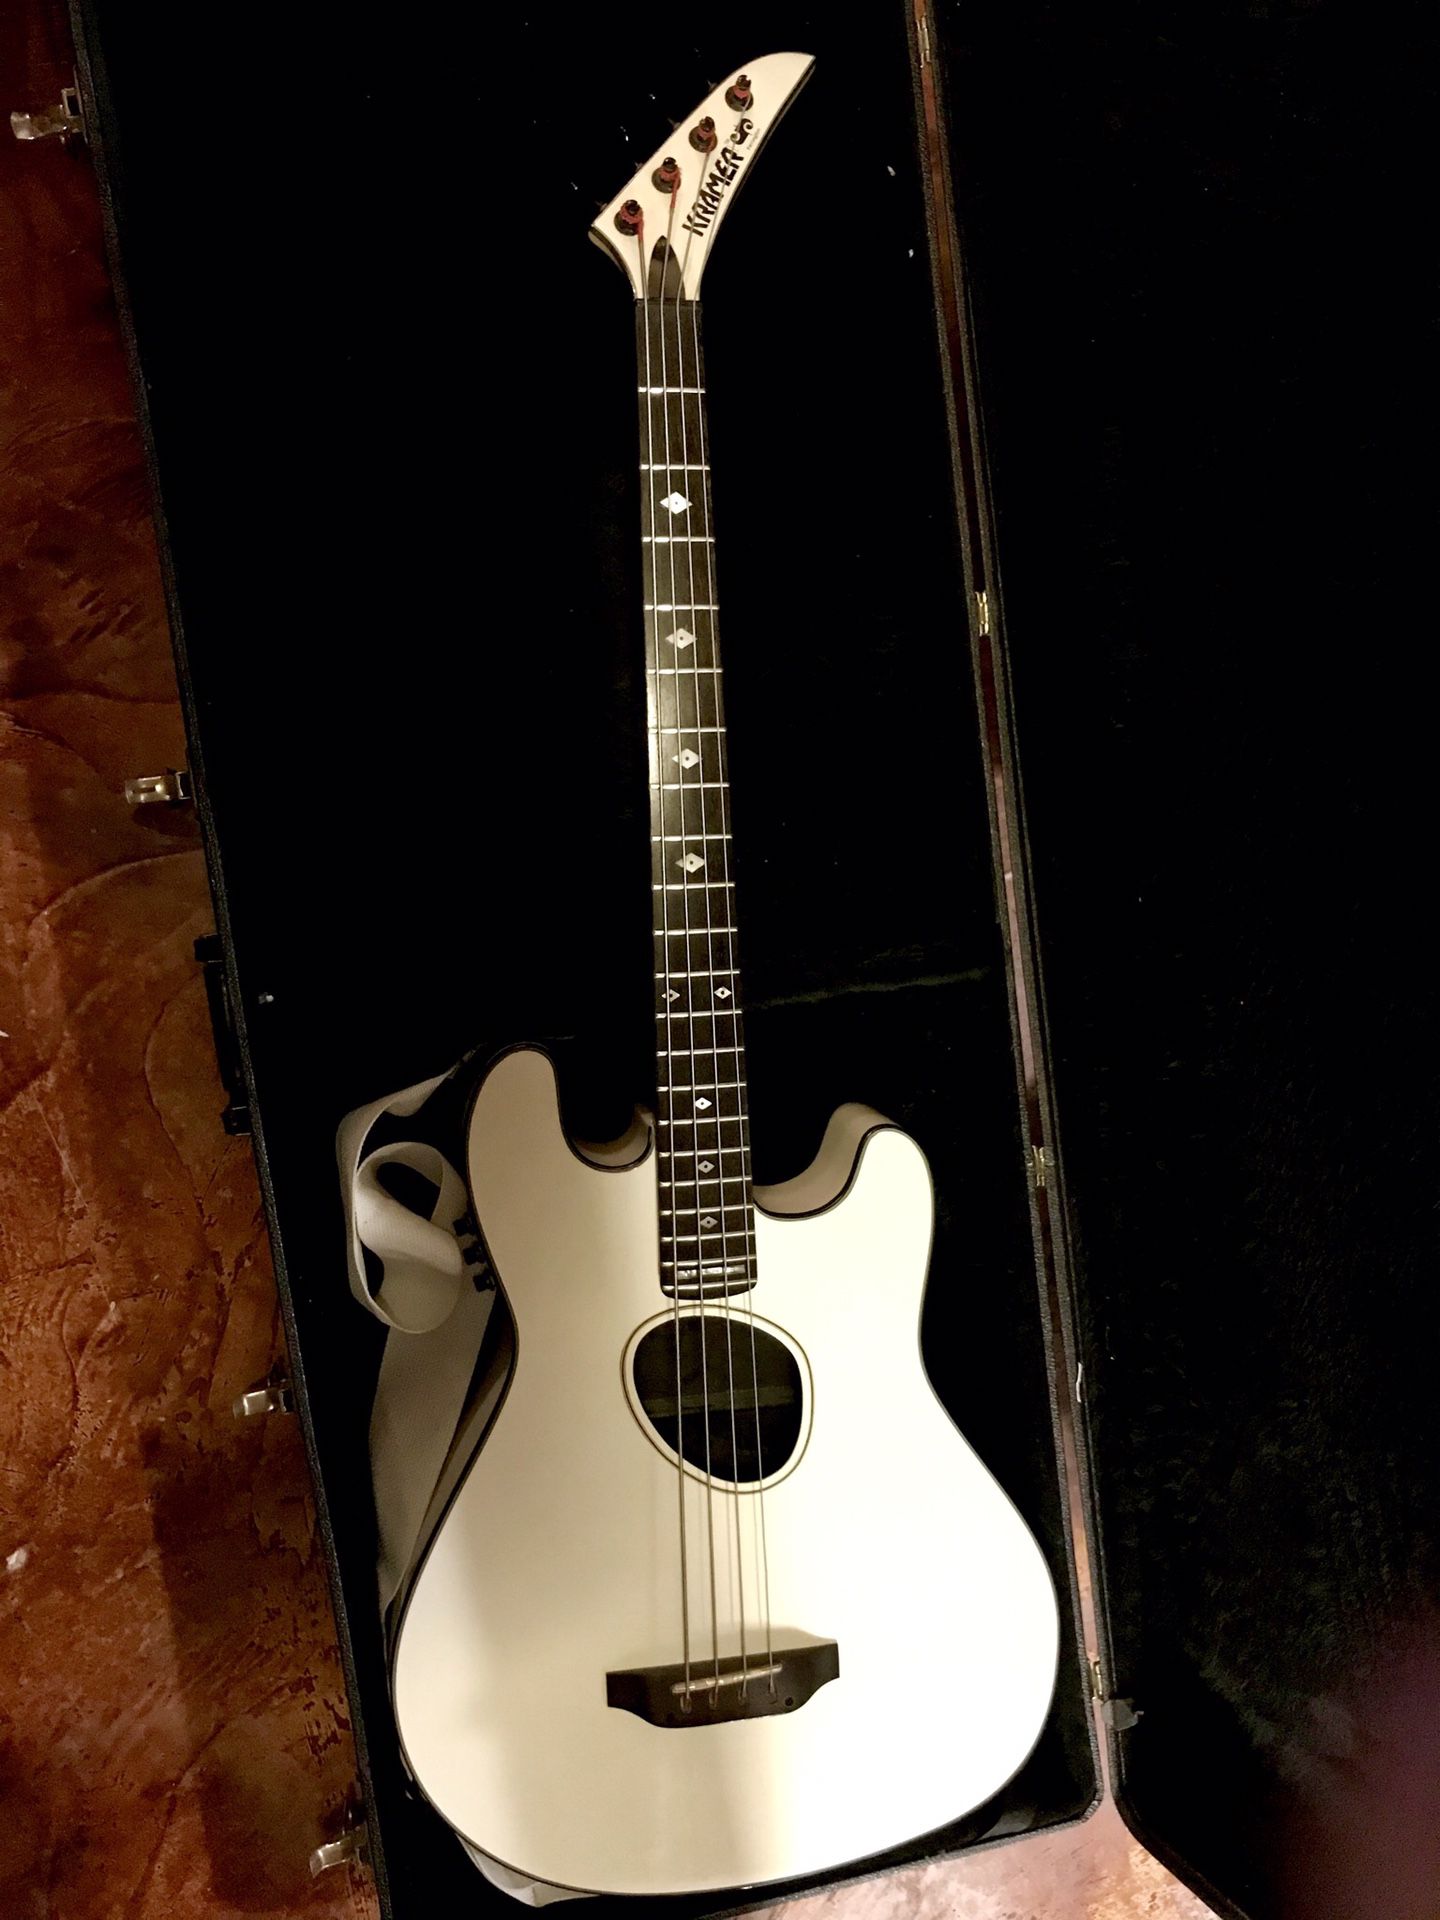 Rare White Kramer Ferrington Acoustic/Electric Bass with case.